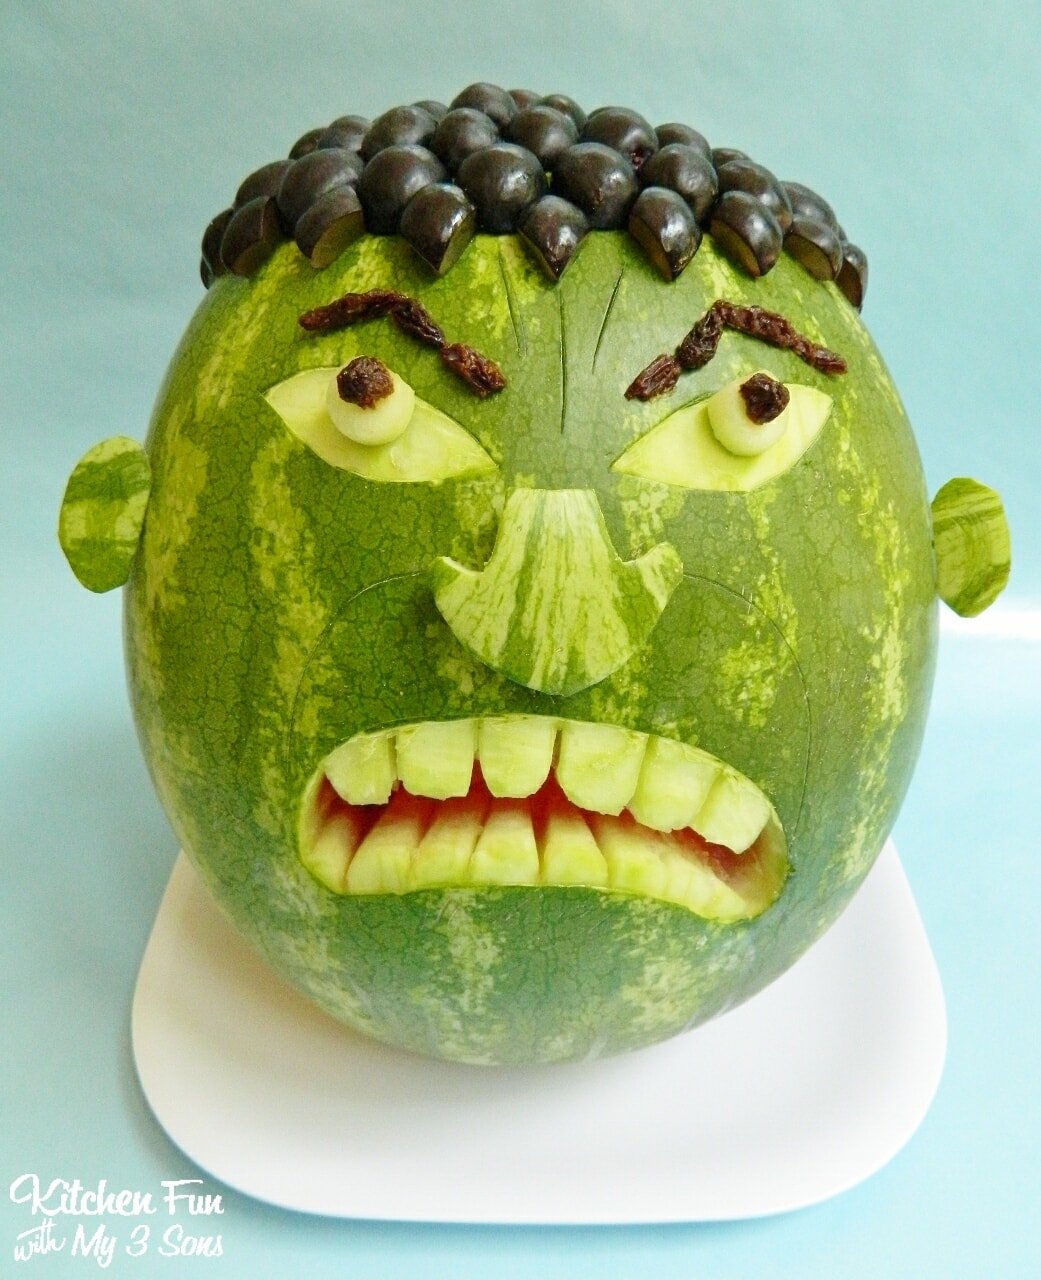 The Hulk Watermelon